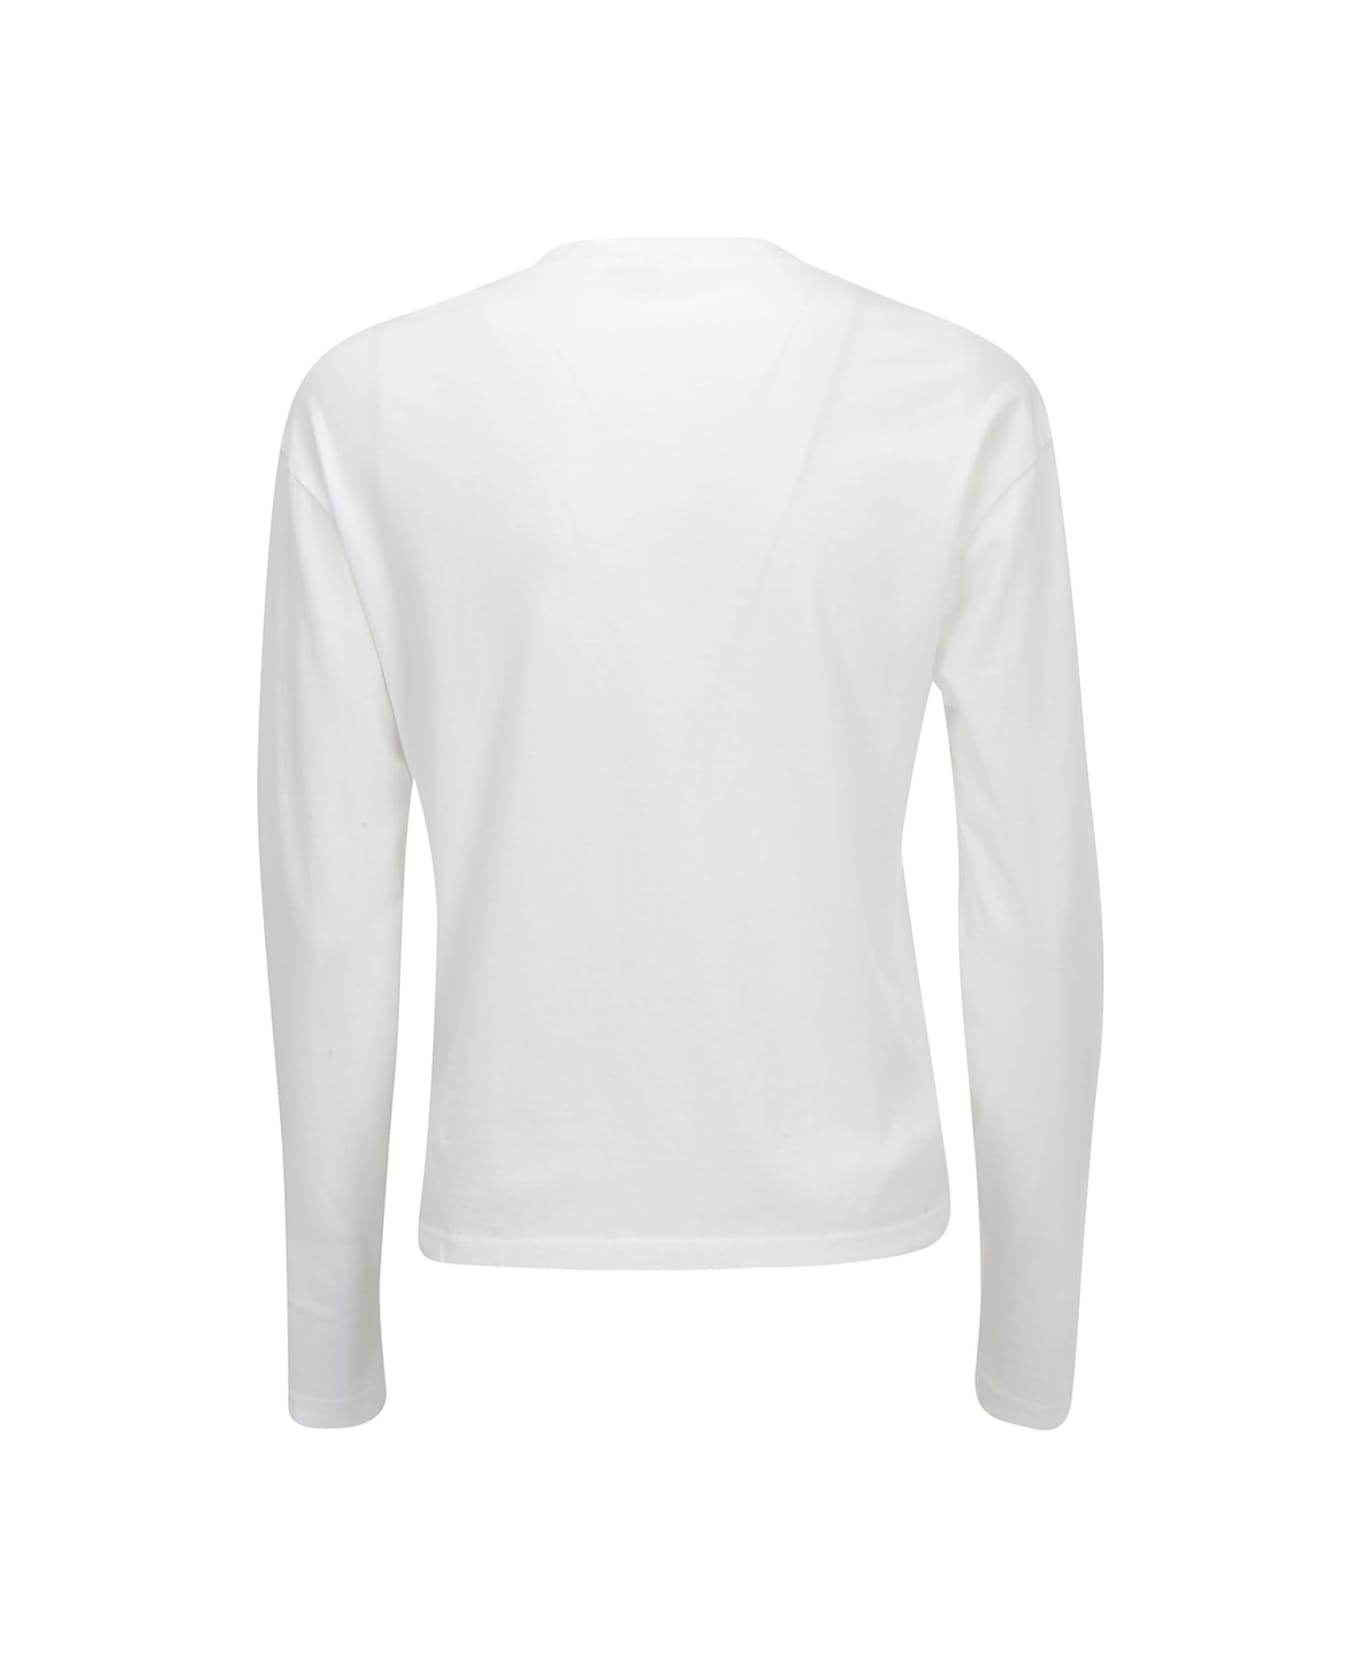 James Perse Sweatshirt - Wht White Tシャツ